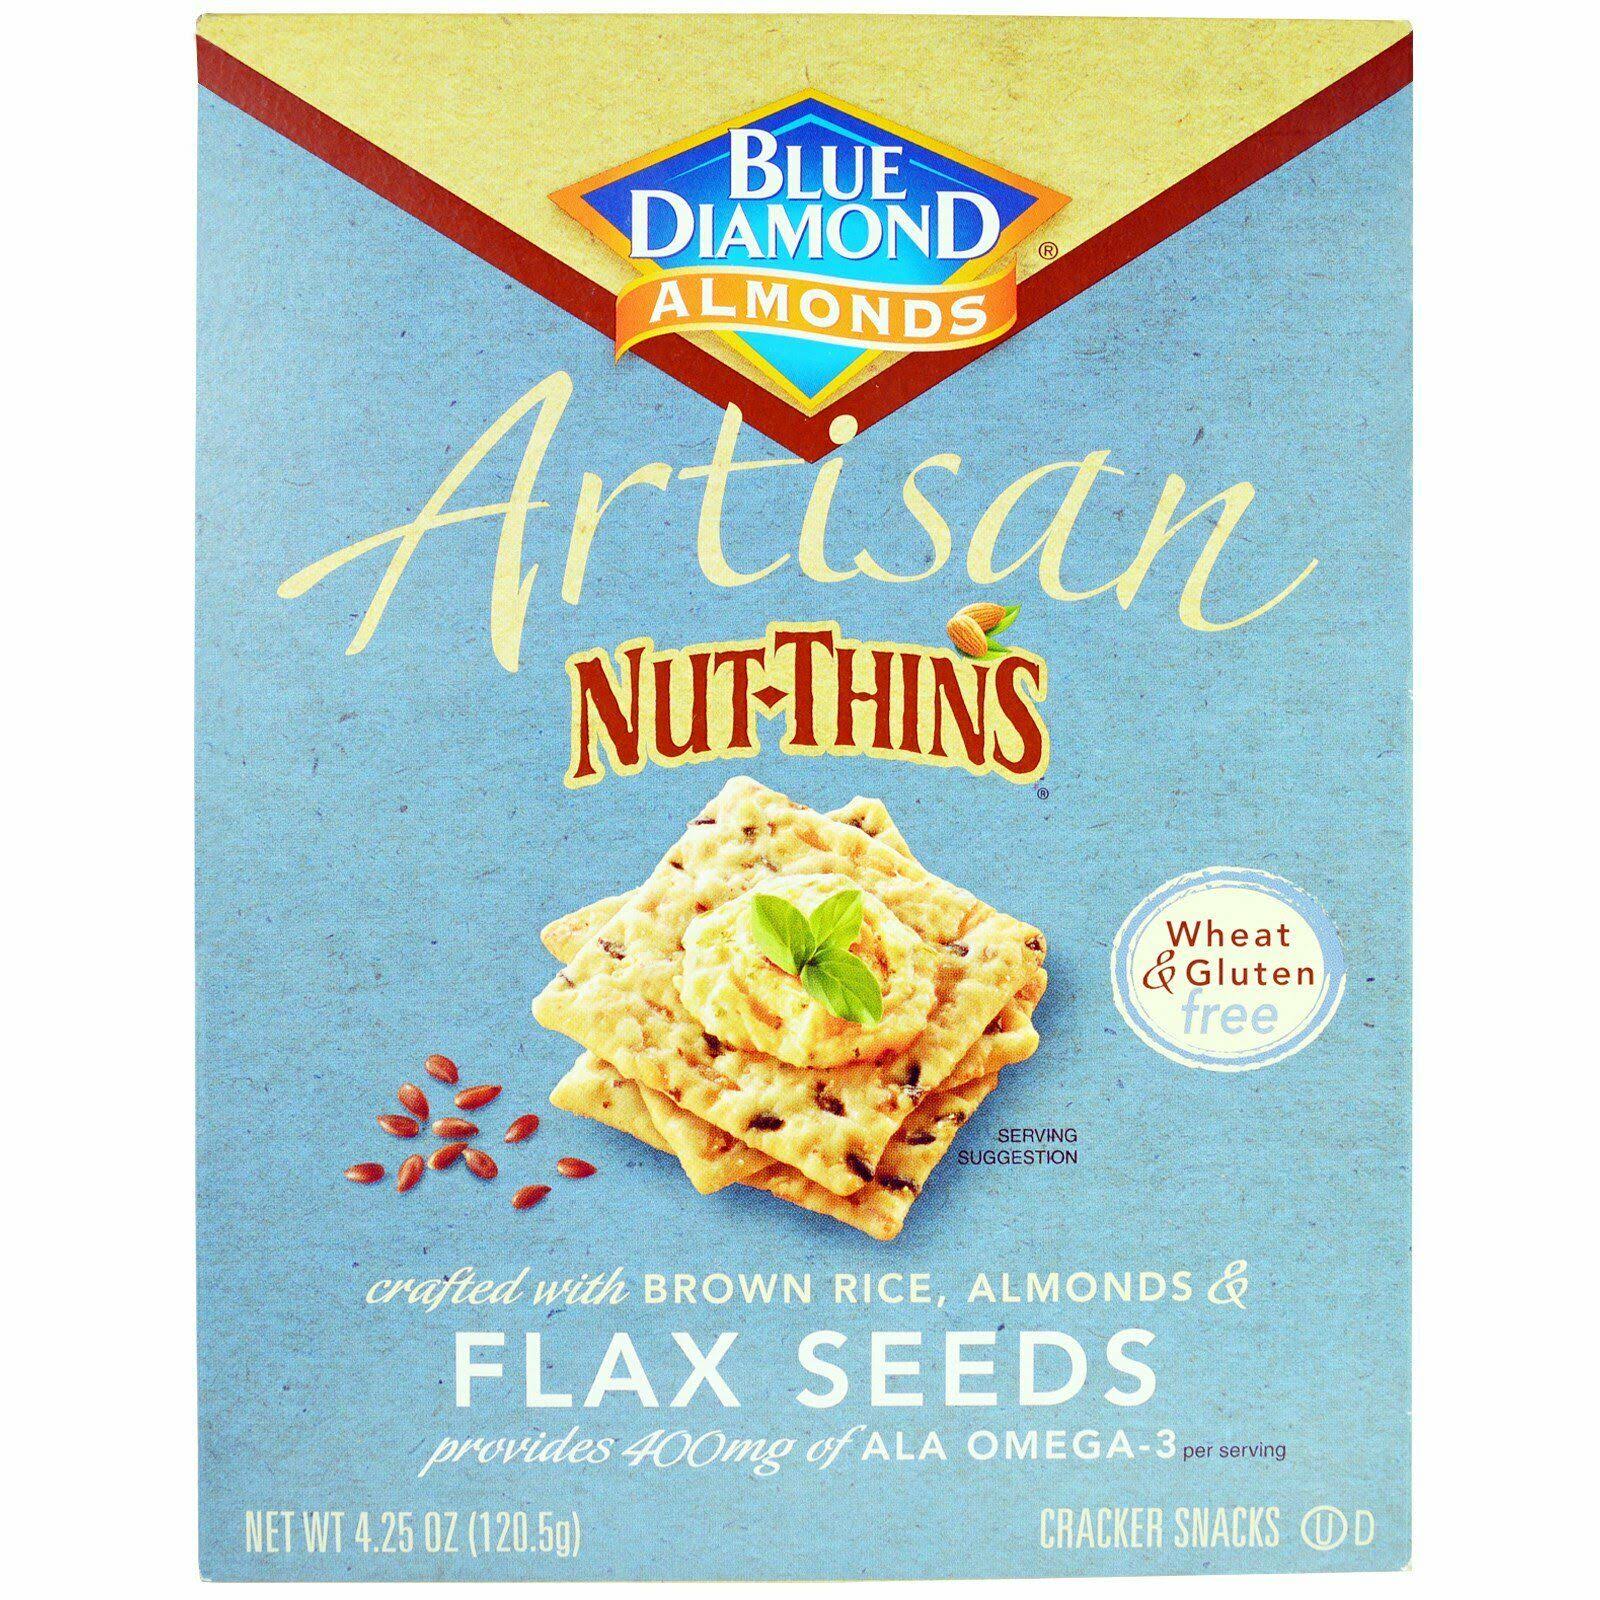 Blue Diamond Almonds Artisan Nut-Thins Flax Seeds Cracker Snacks - 4.25 oz